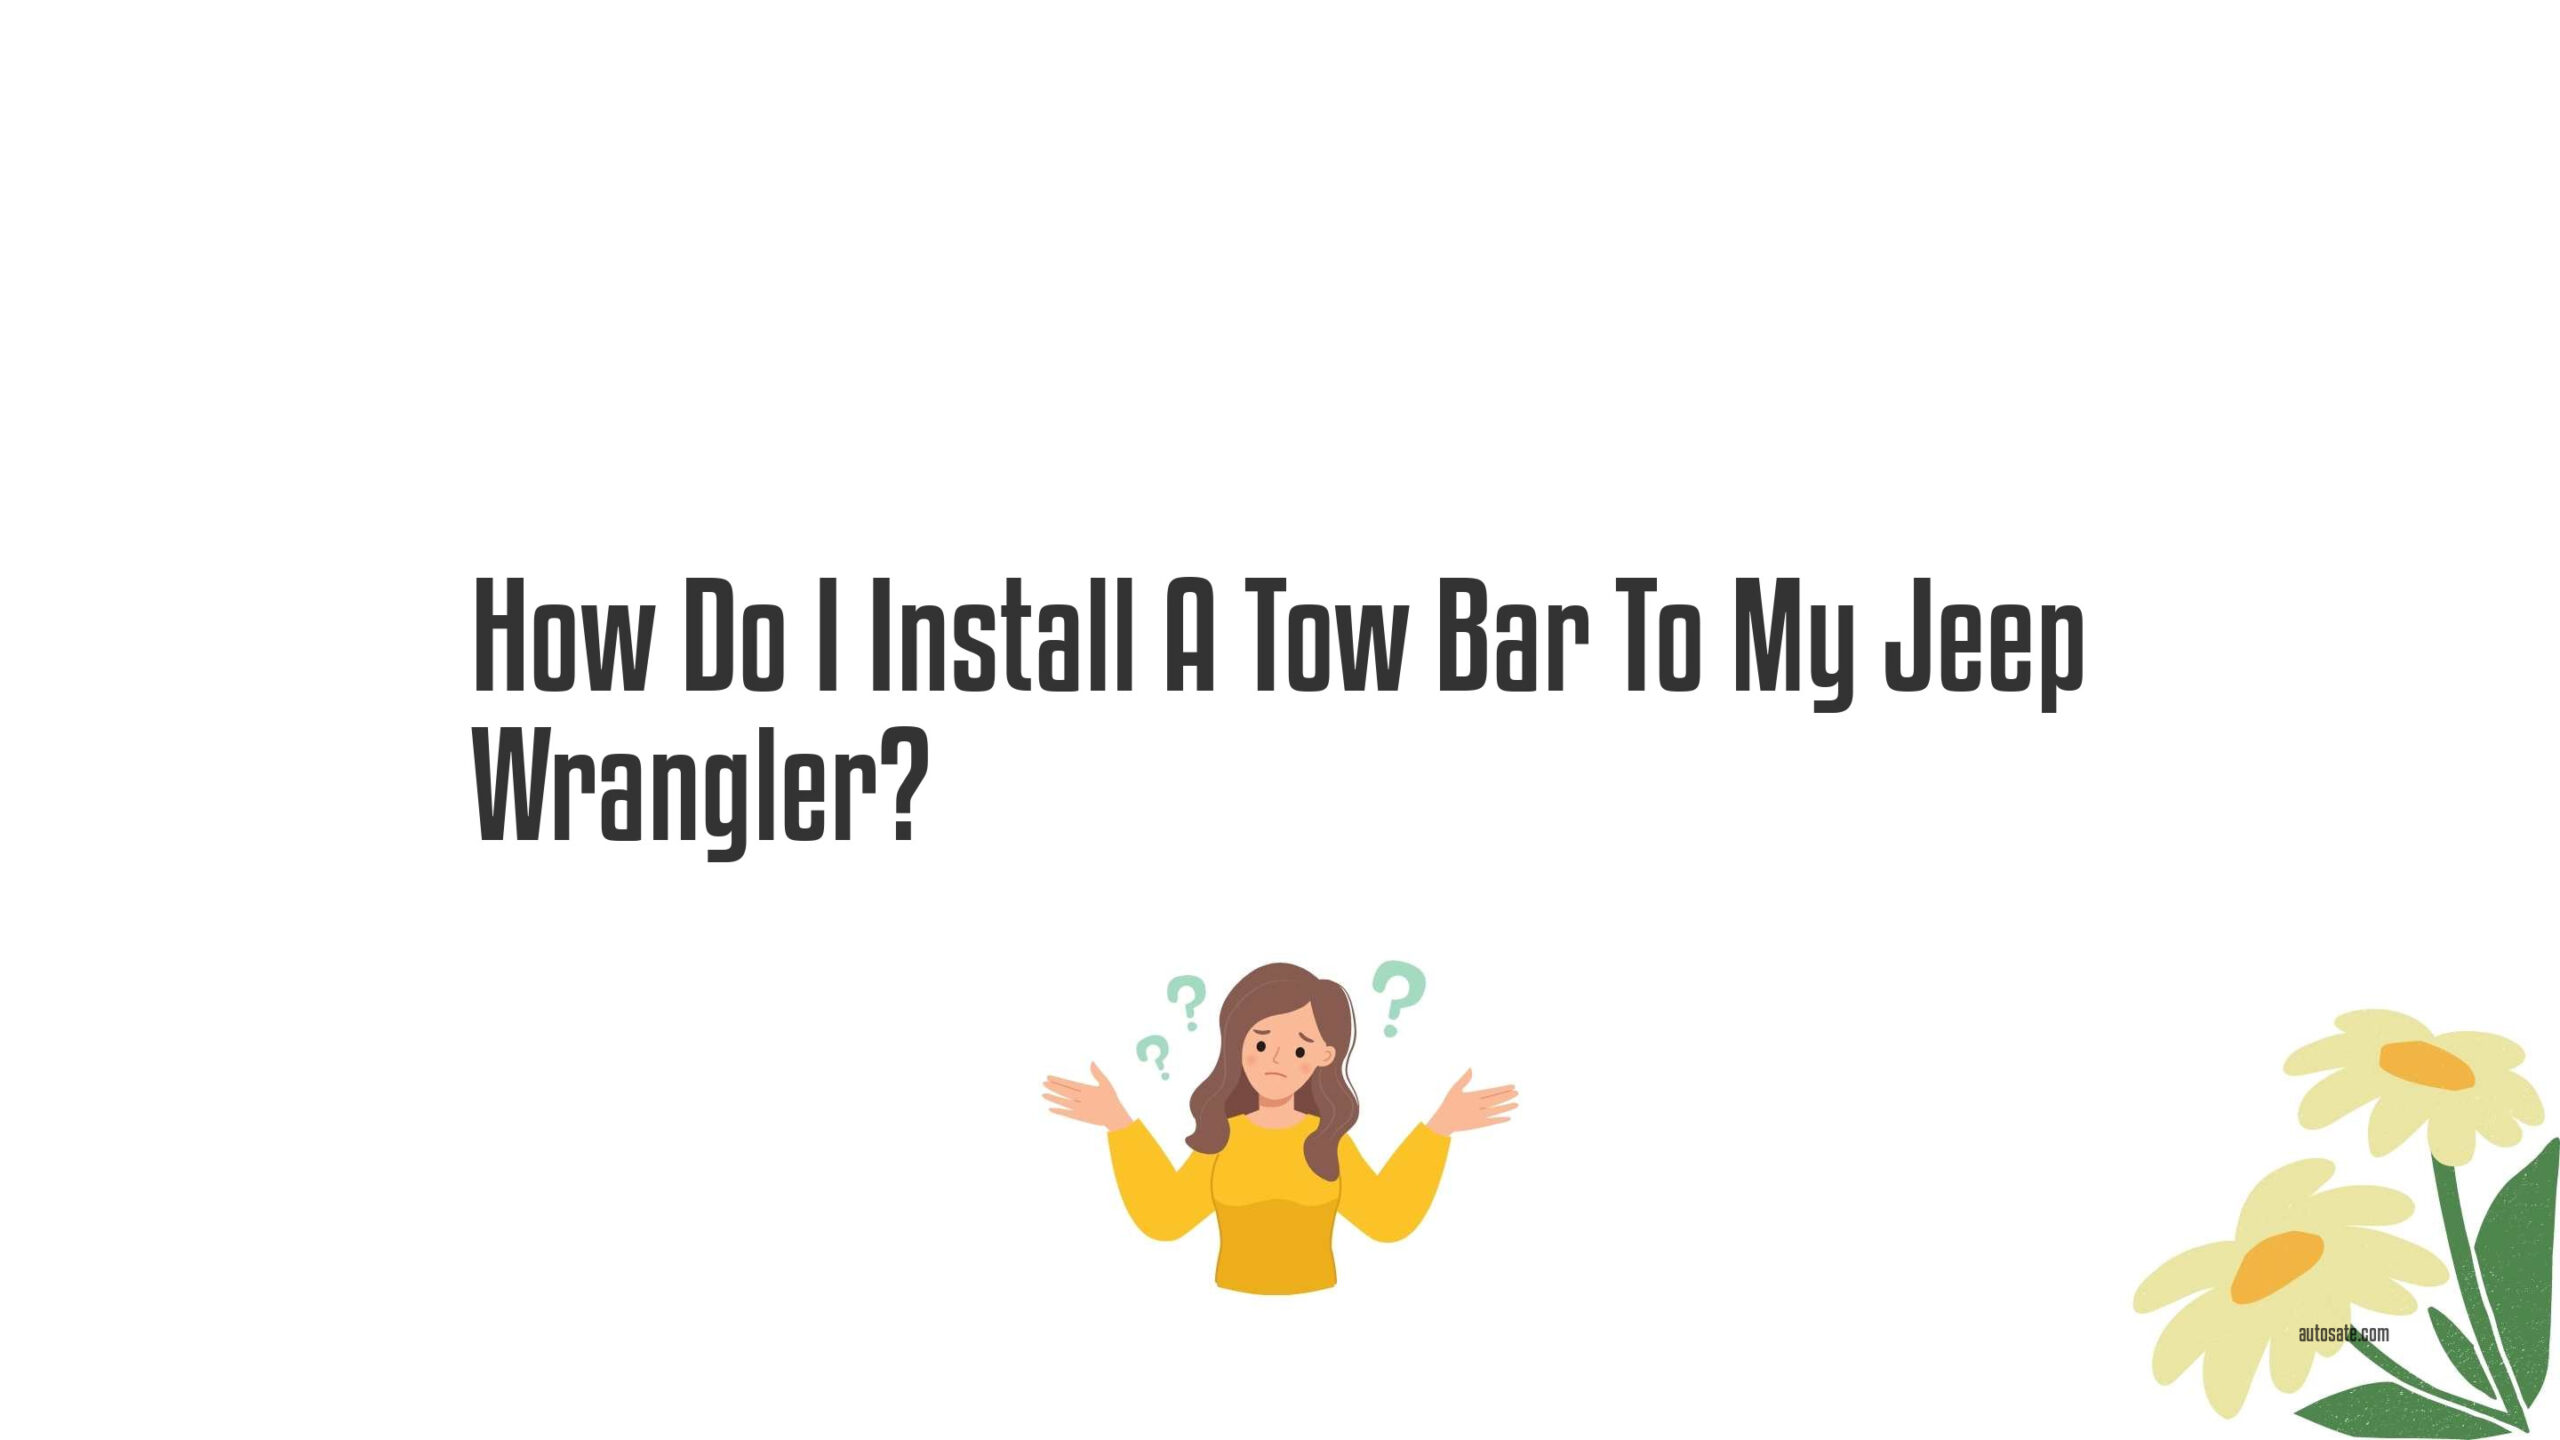 How Do I Install A Tow Bar To My Jeep Wrangler?